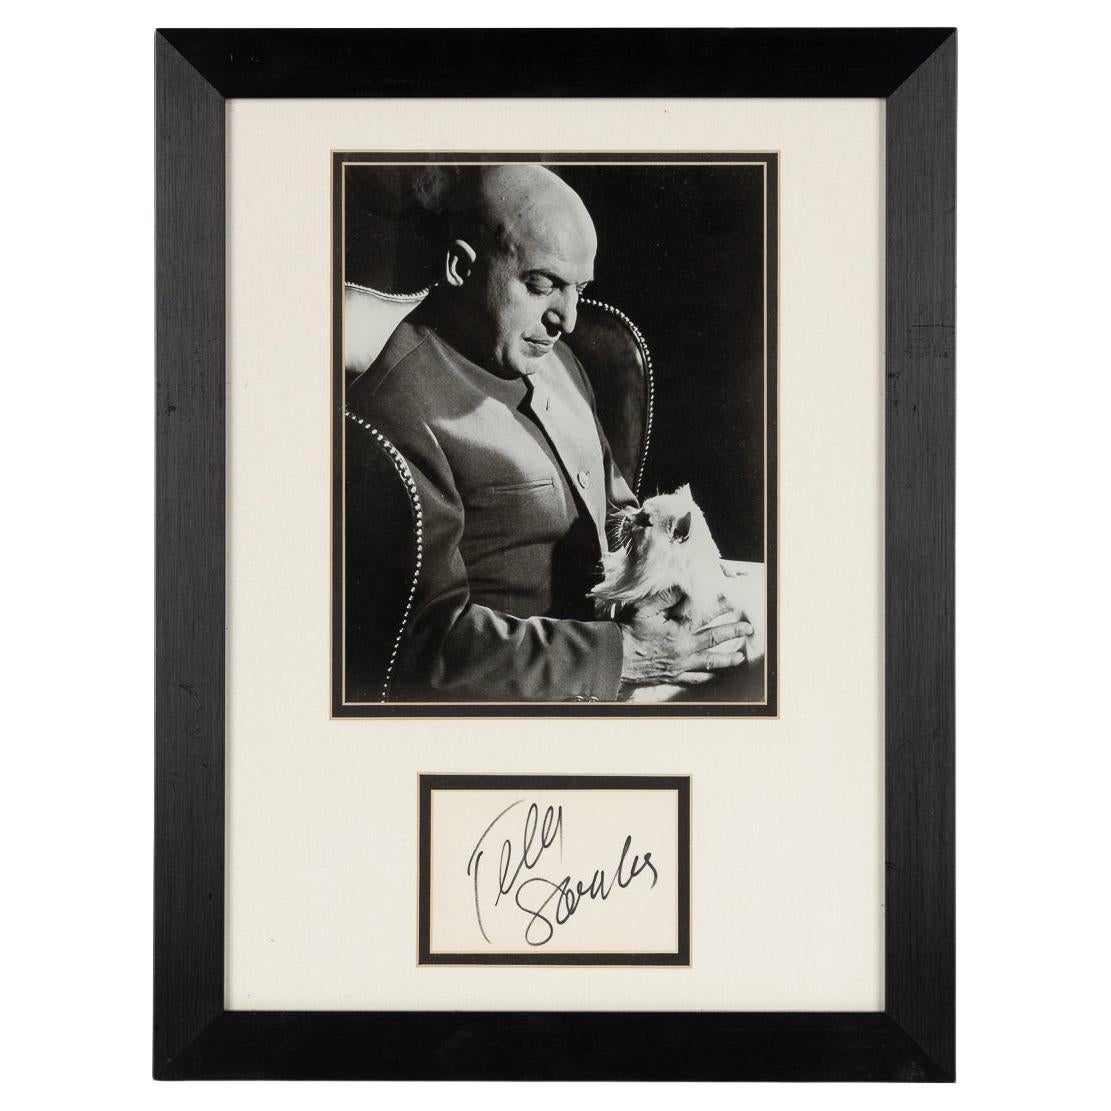 Photo & Signature By Telly Savalas (1922 - 1994) 'Ernst Stavro Blofeld'